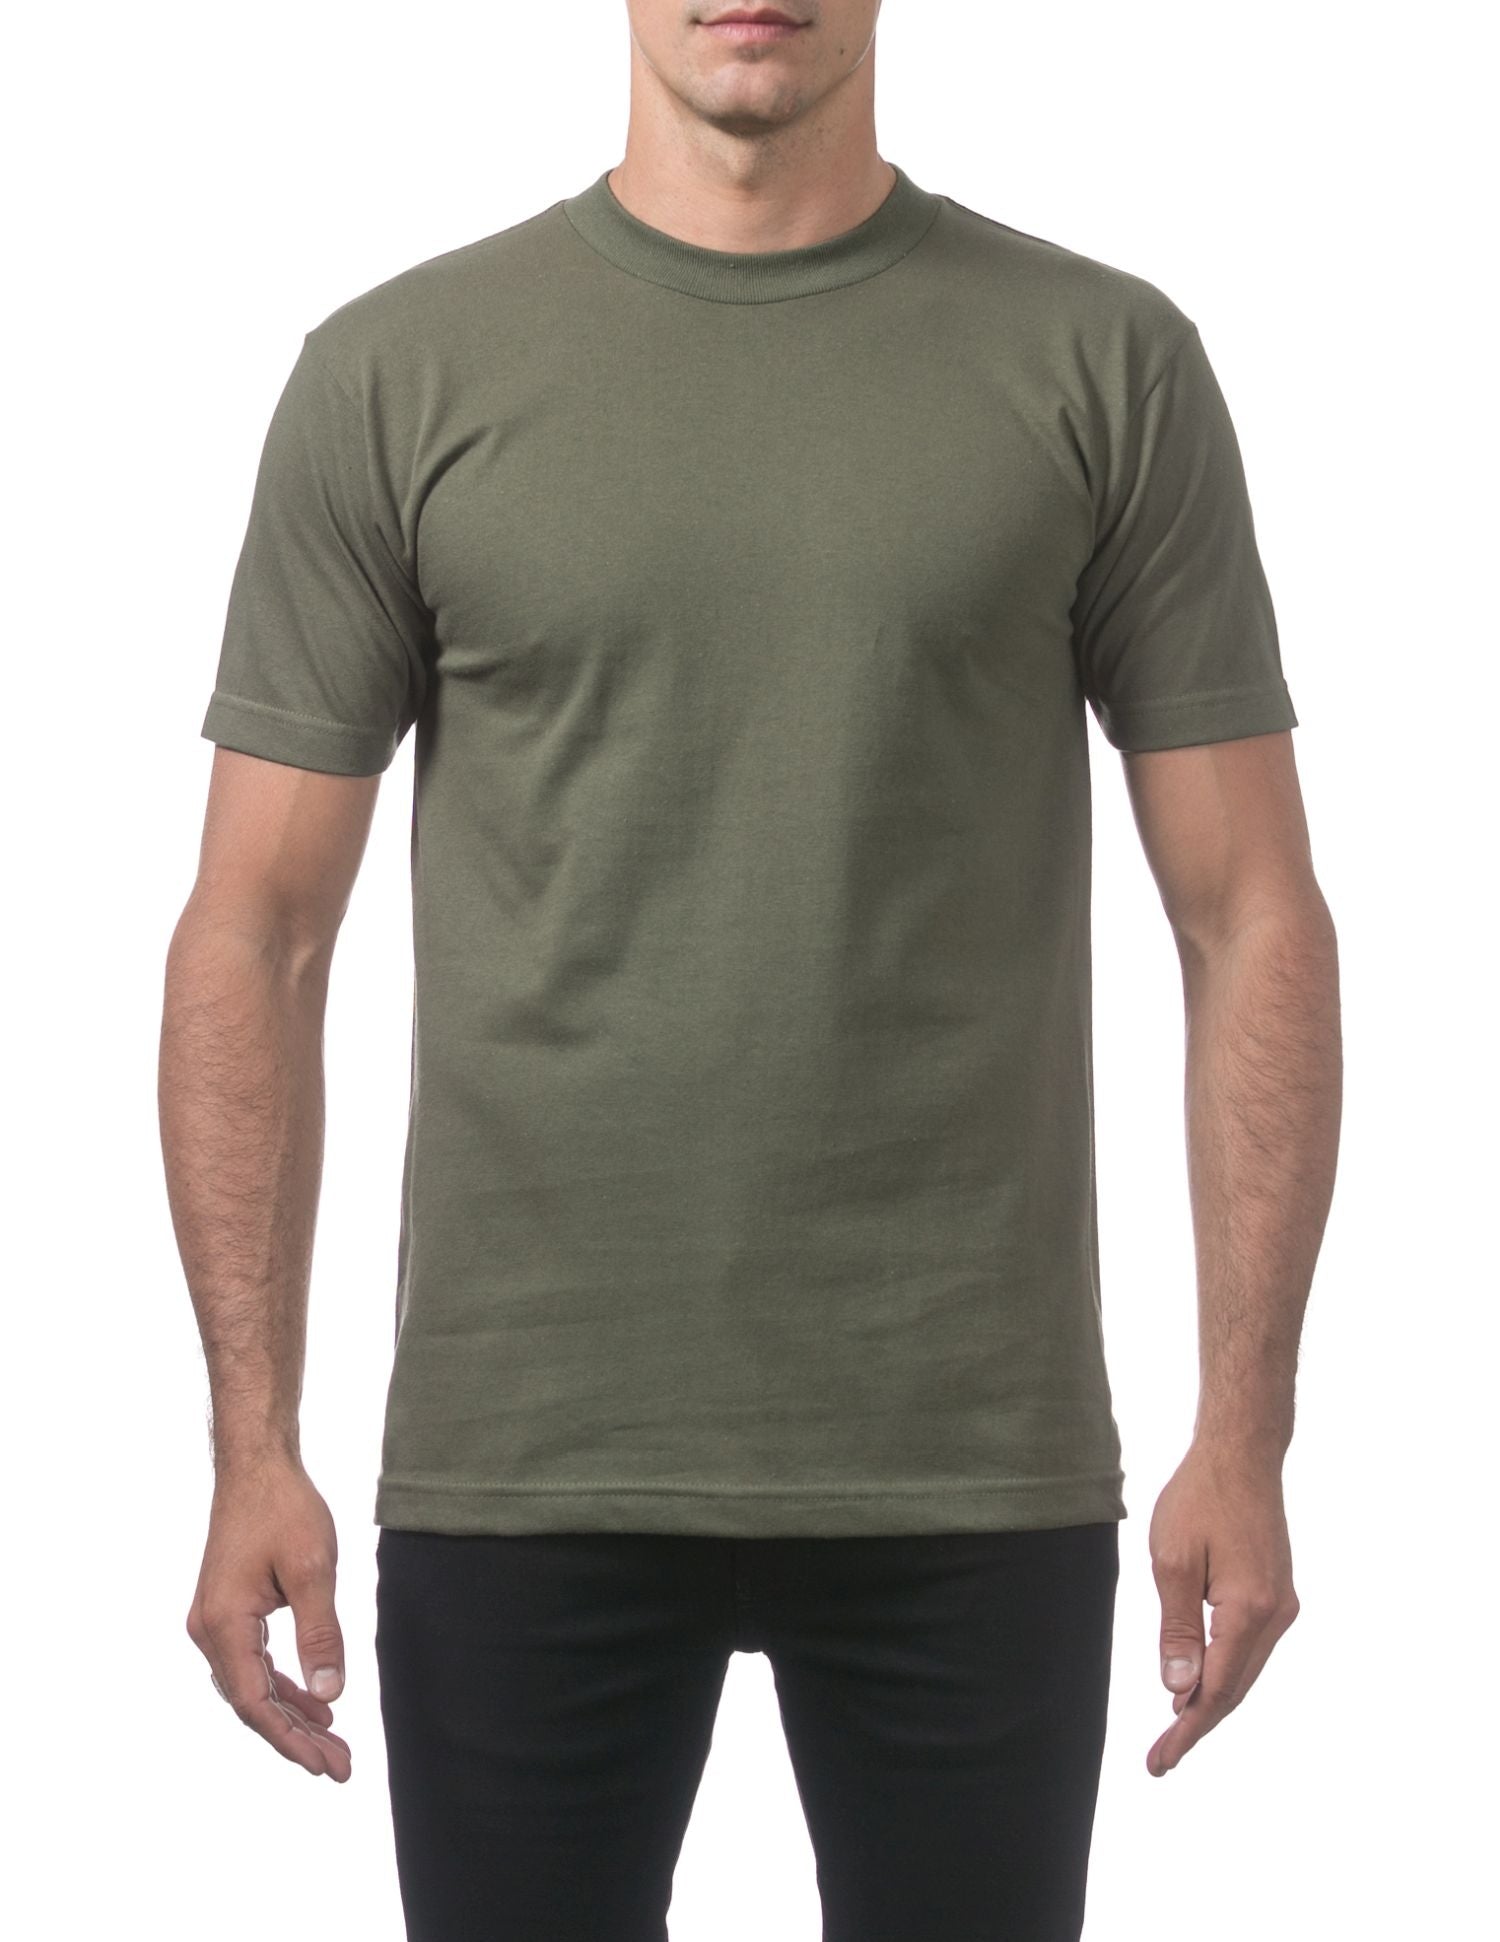 Pro Club Men's Comfort Cotton Short Sleeve T-Shirt - Olive Green - Small - Pro-Distributing